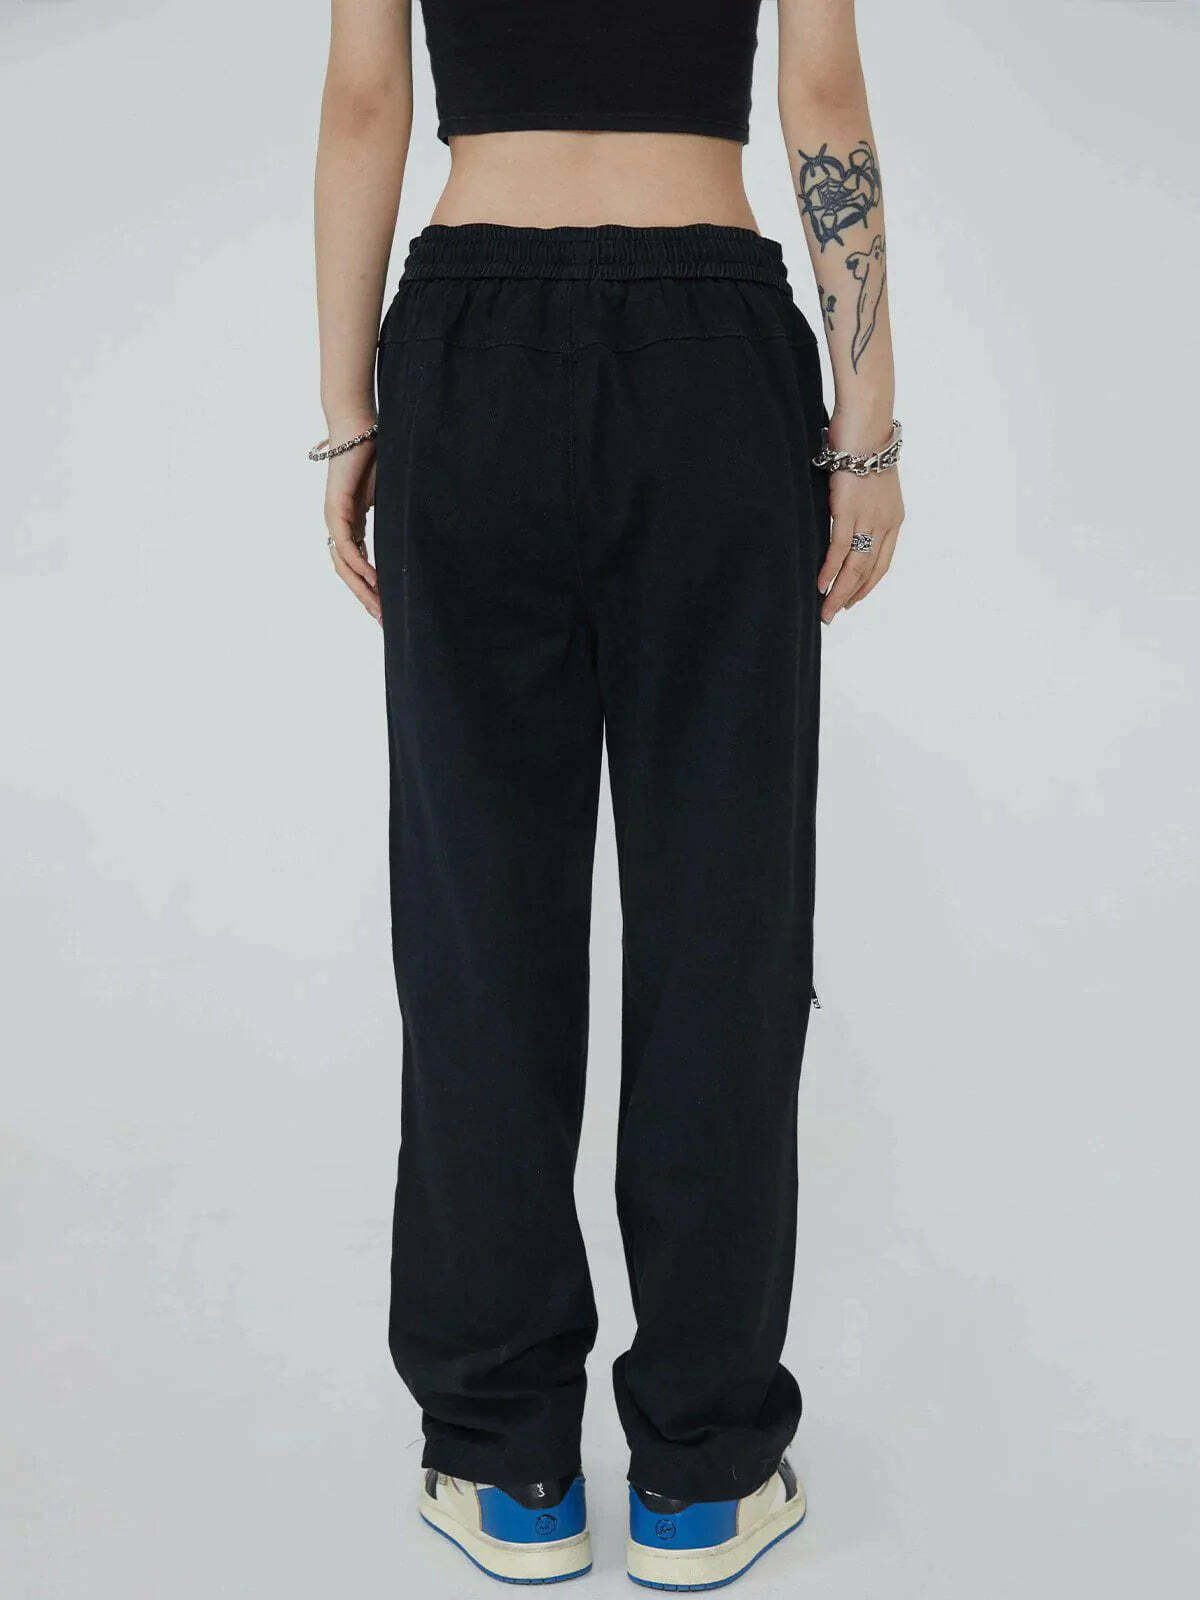 zipperembellished cargo pants edgy streetwear essential 5497